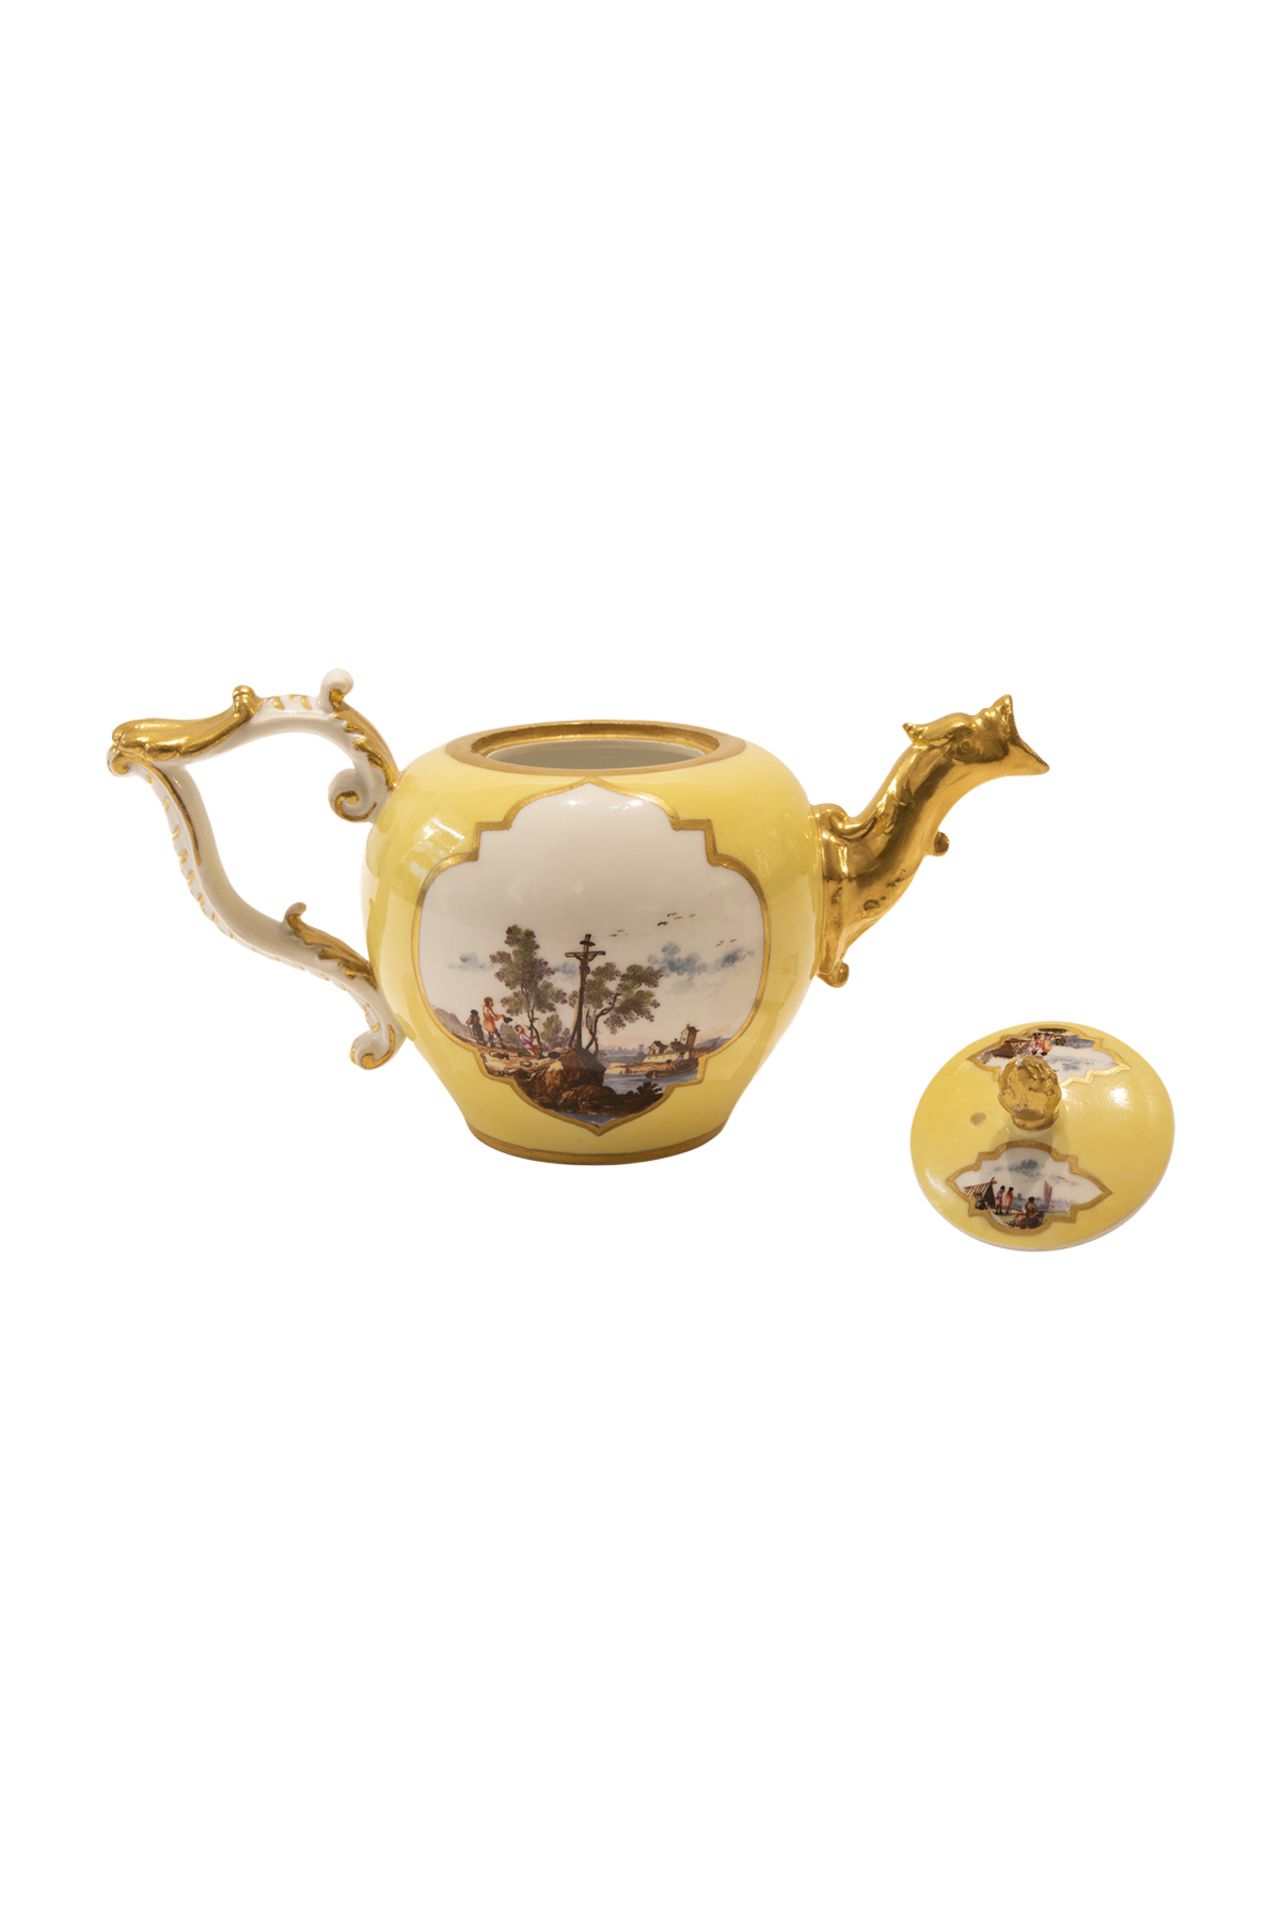 Teapot lemon yellow stock, Meissen 1740 - Image 3 of 6